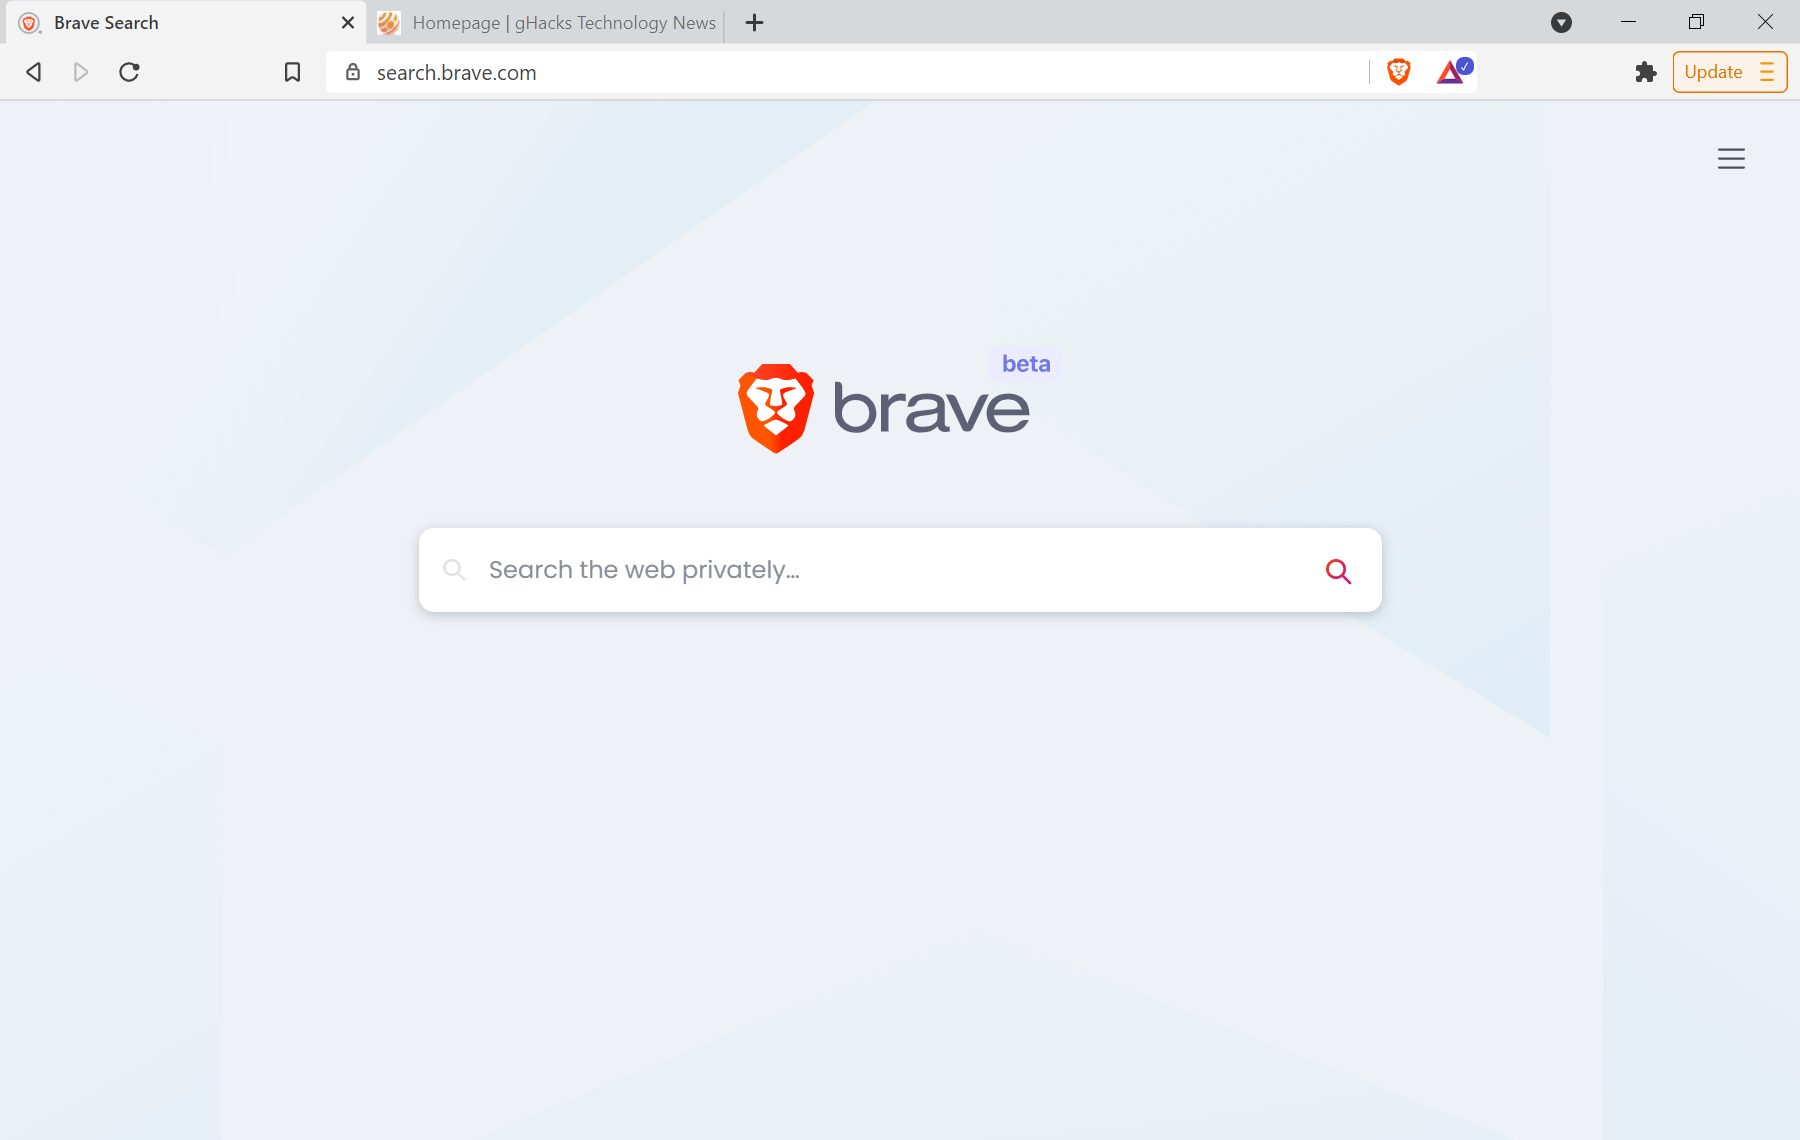 brave-search-beta